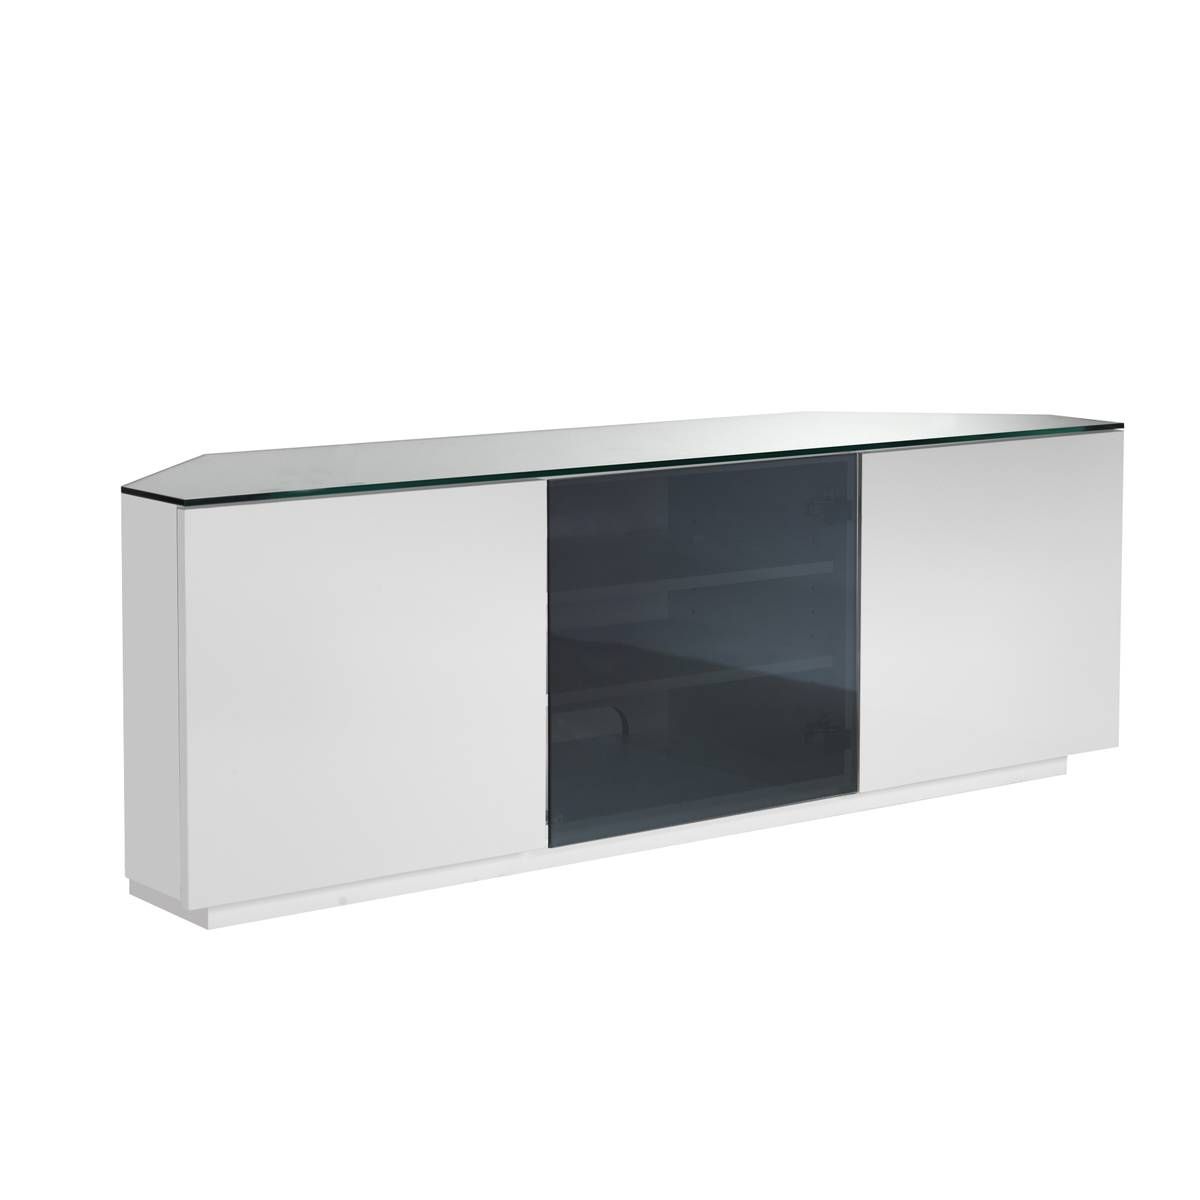 Ukcf Milan White Gloss & Black Glass Corner Tv Stand 150cm With Corner Tv Unit White Gloss (View 9 of 15)